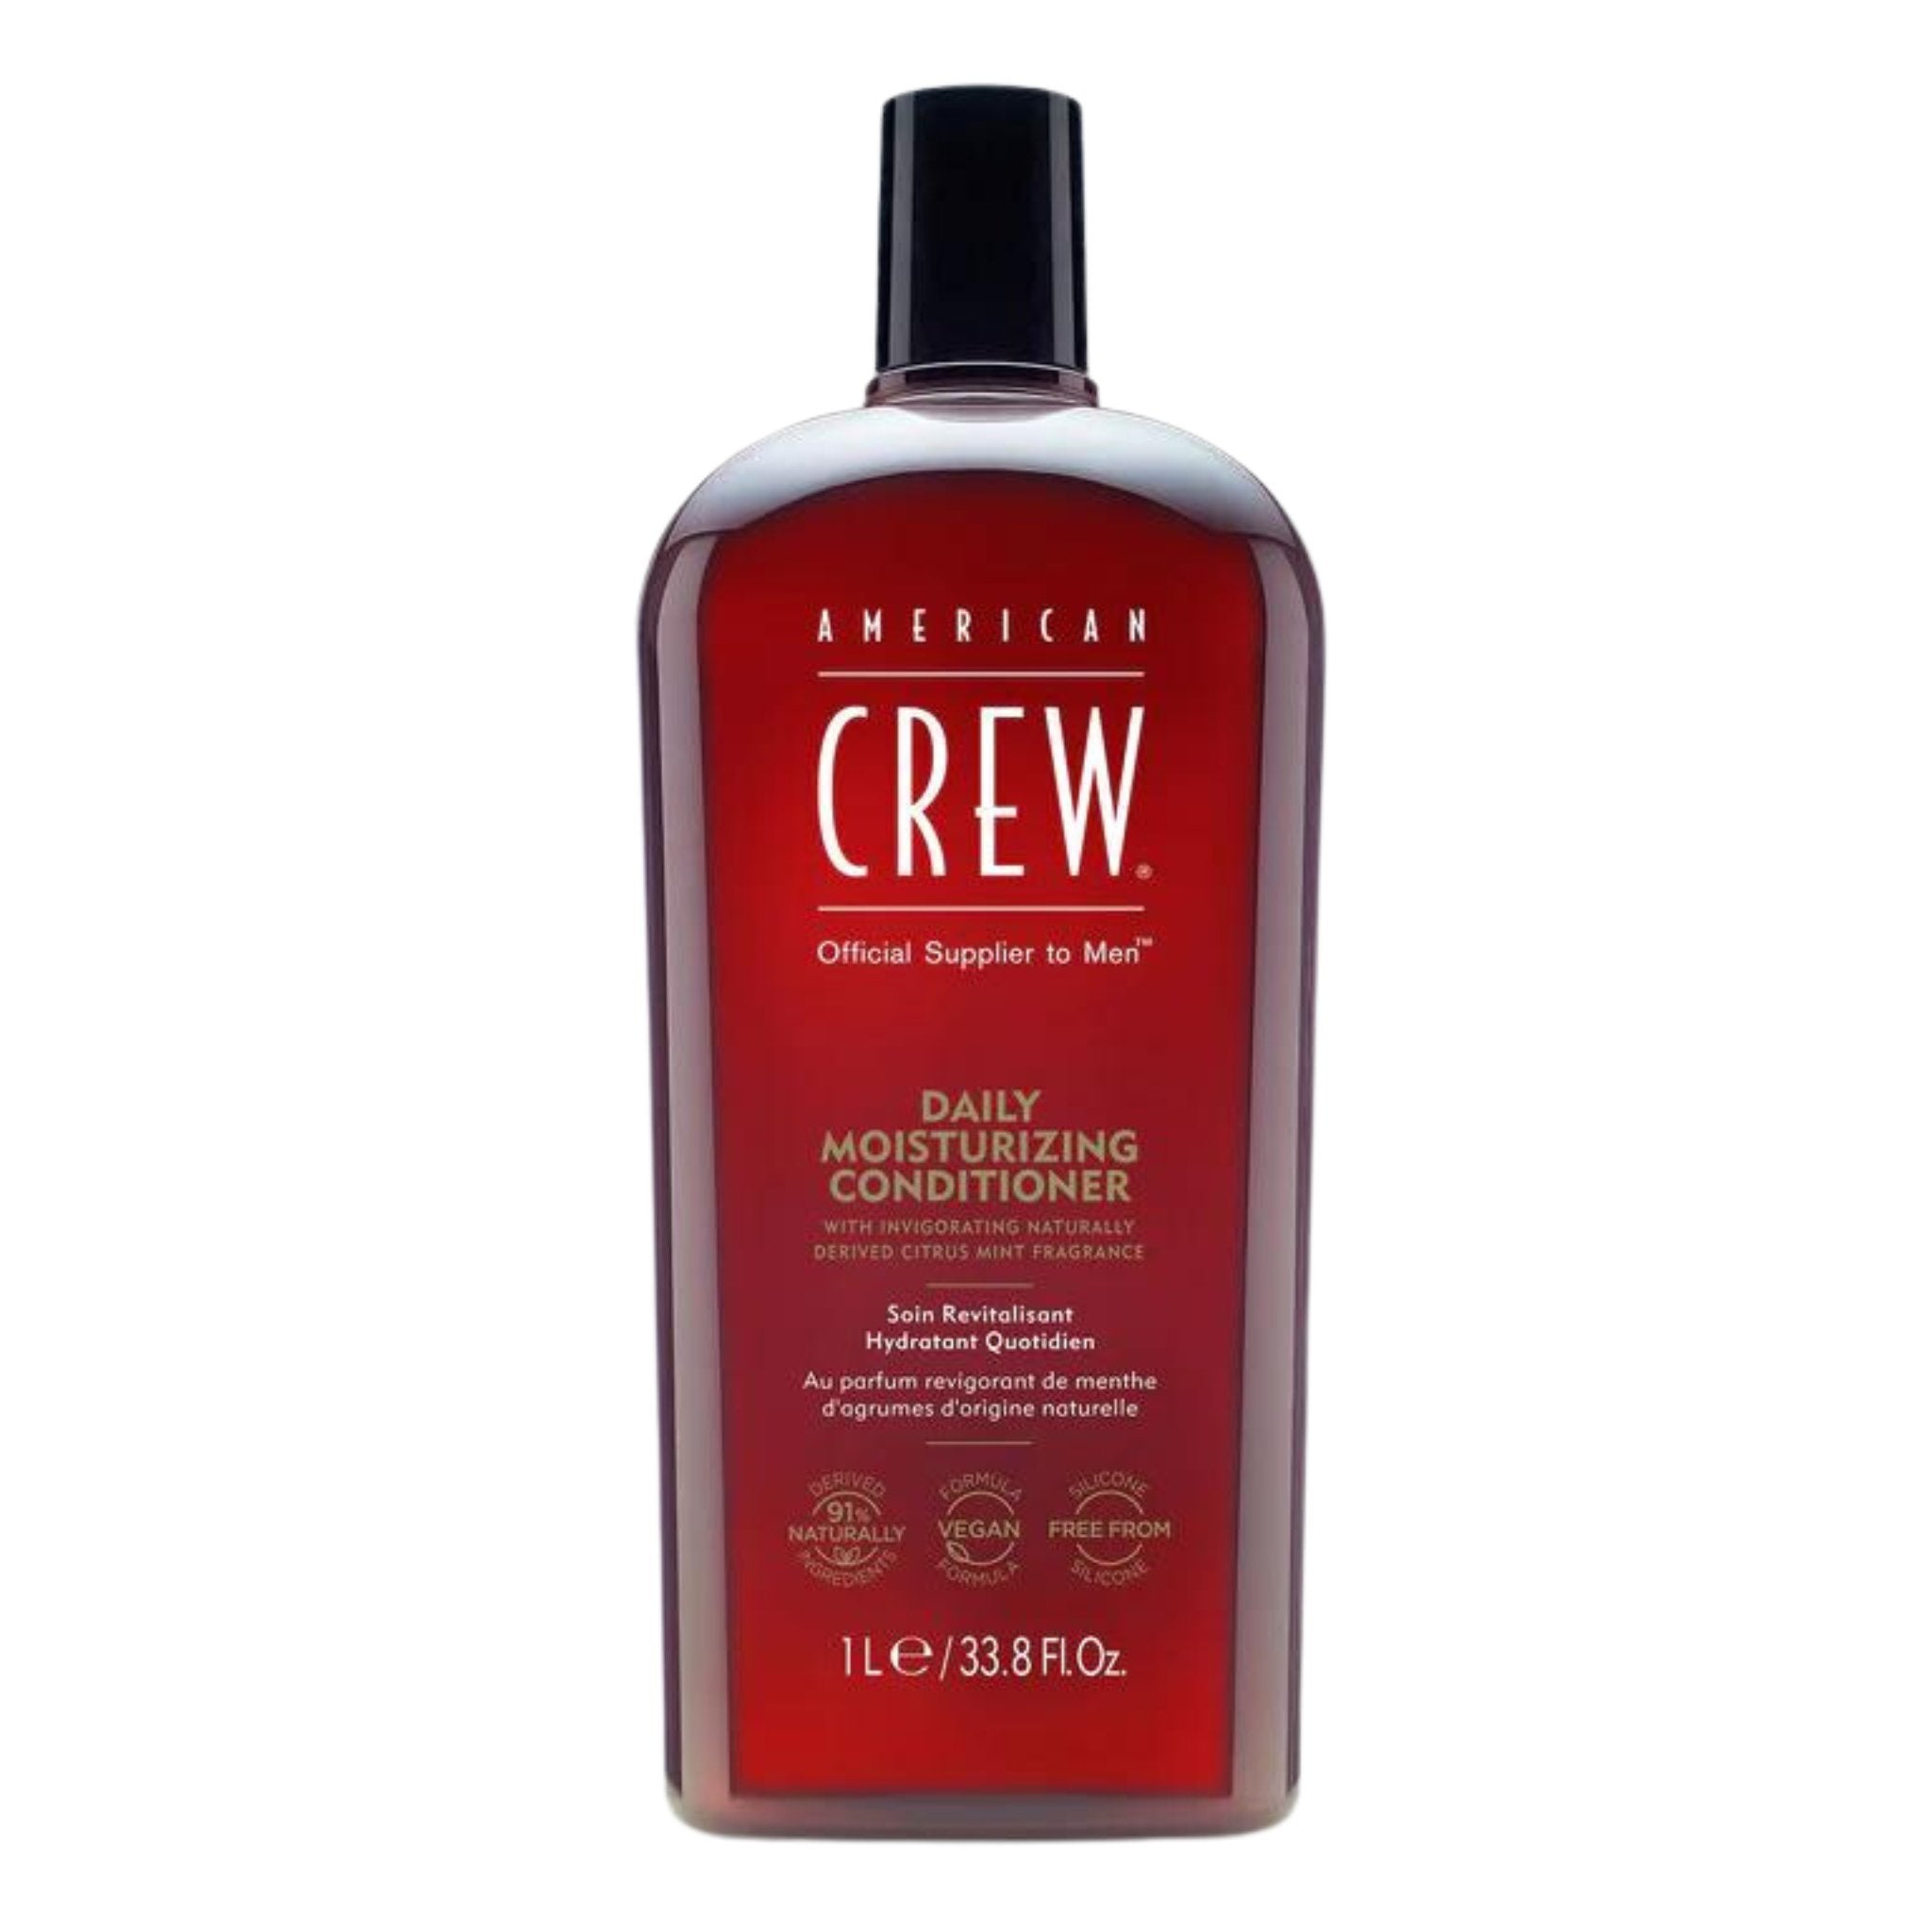 American Crew. Revitalisant Hydratant Quotidien - 1000 ml - Concept C. Shop